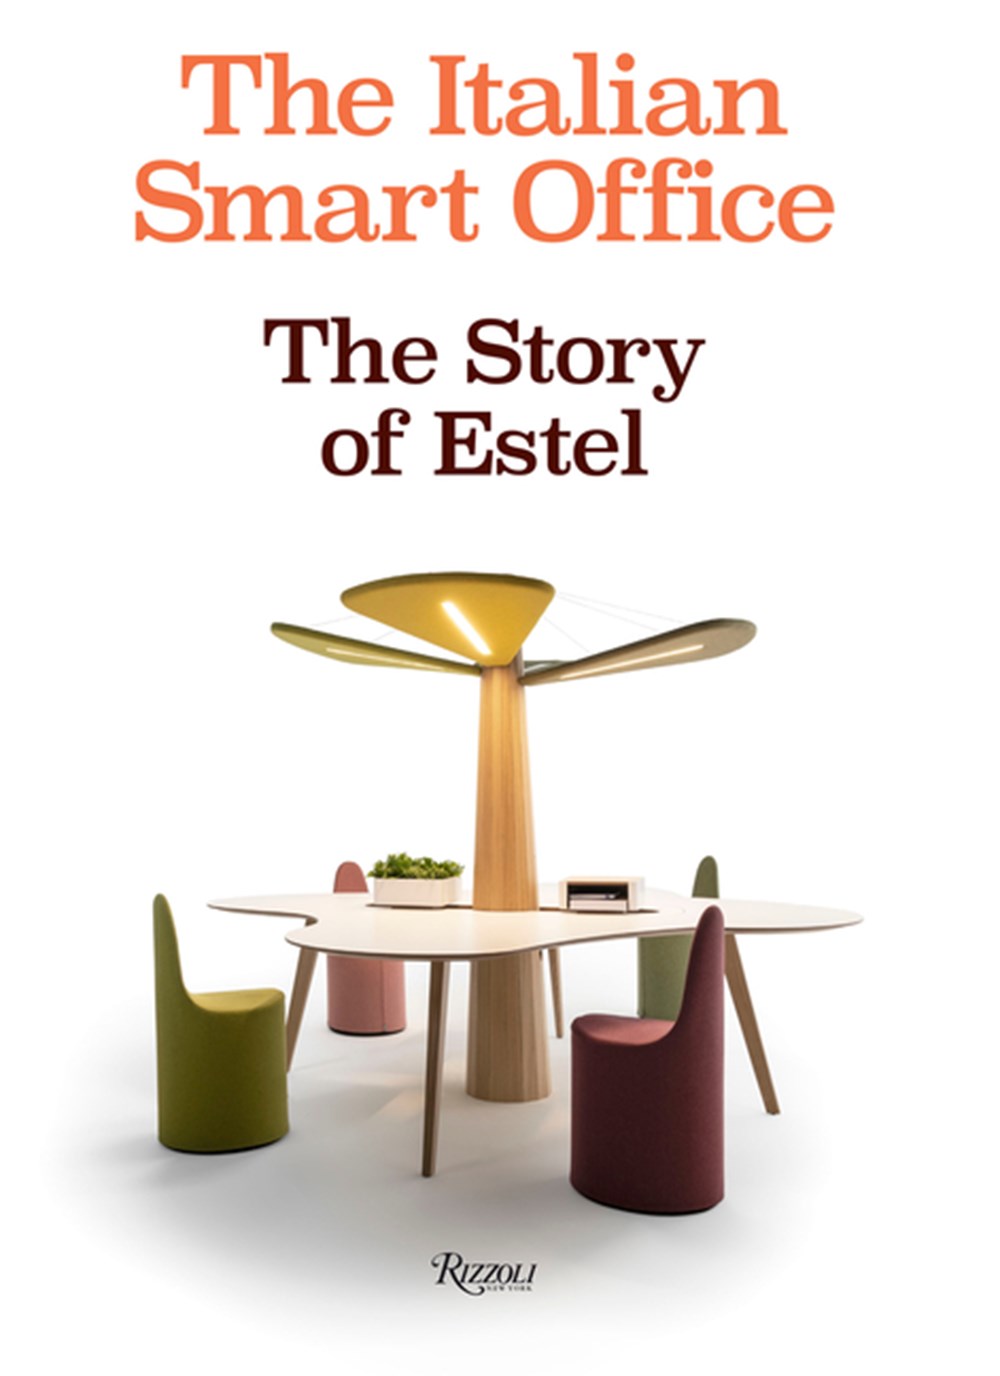 Italian Smart Office: The Story of Estel